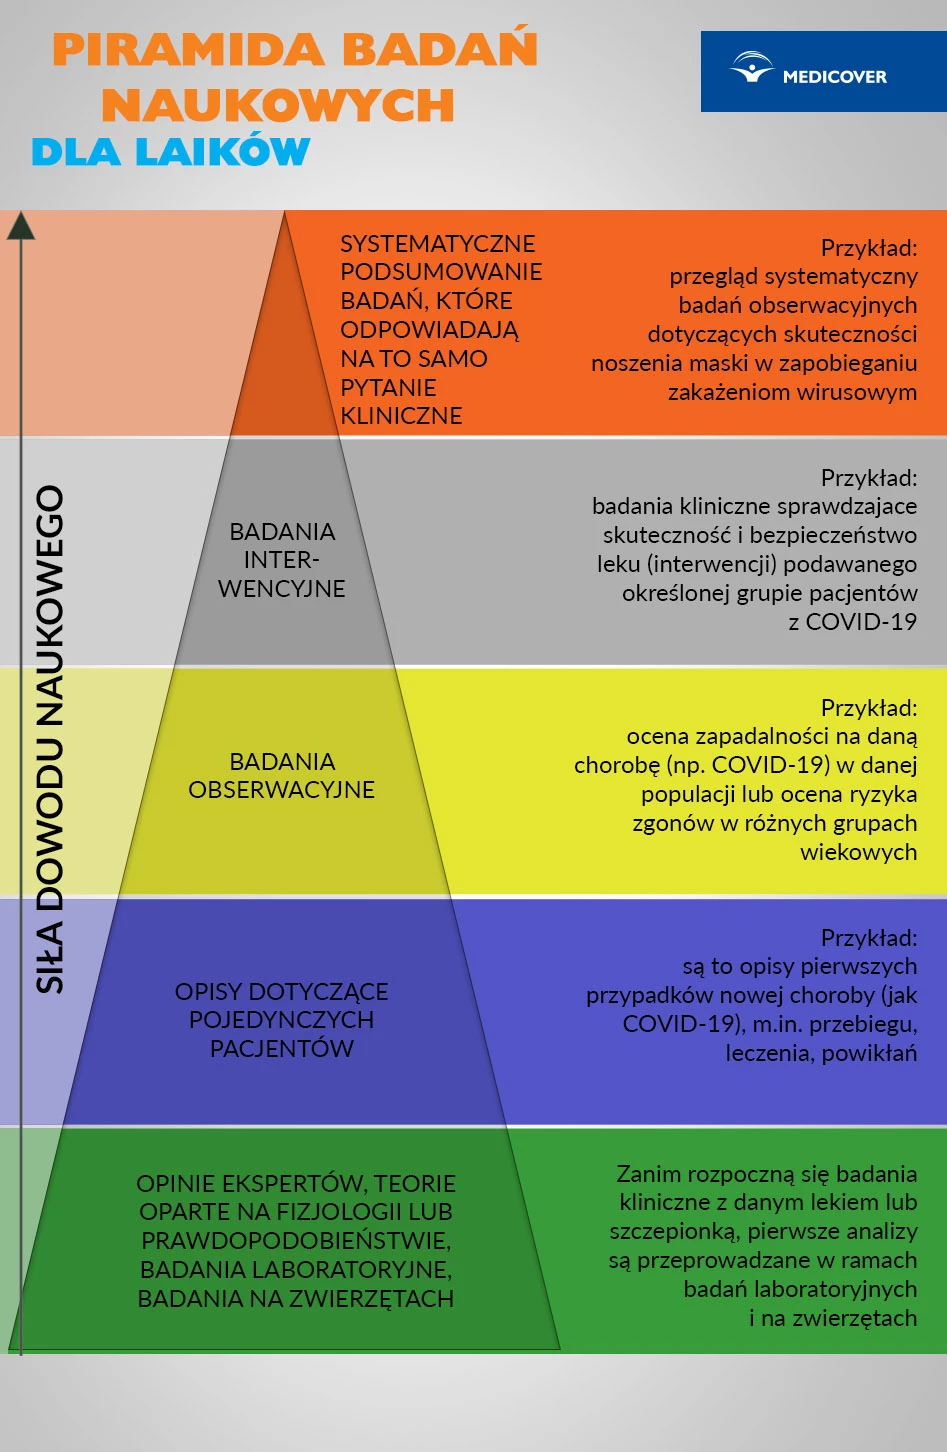 Piramida badań naukowych.